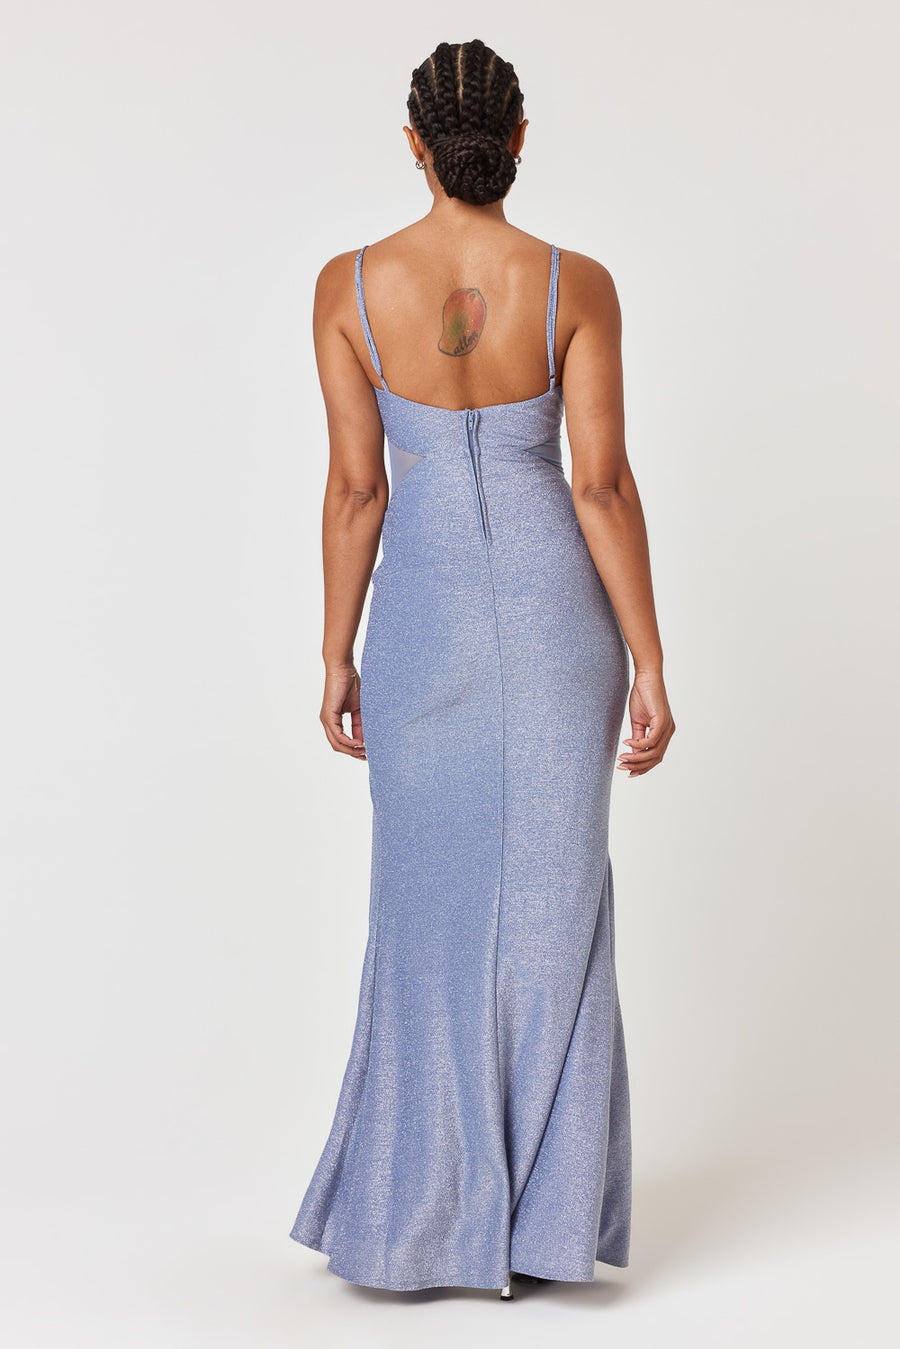 Blue Mesh Cut Out Gown - Trixxi Clothing